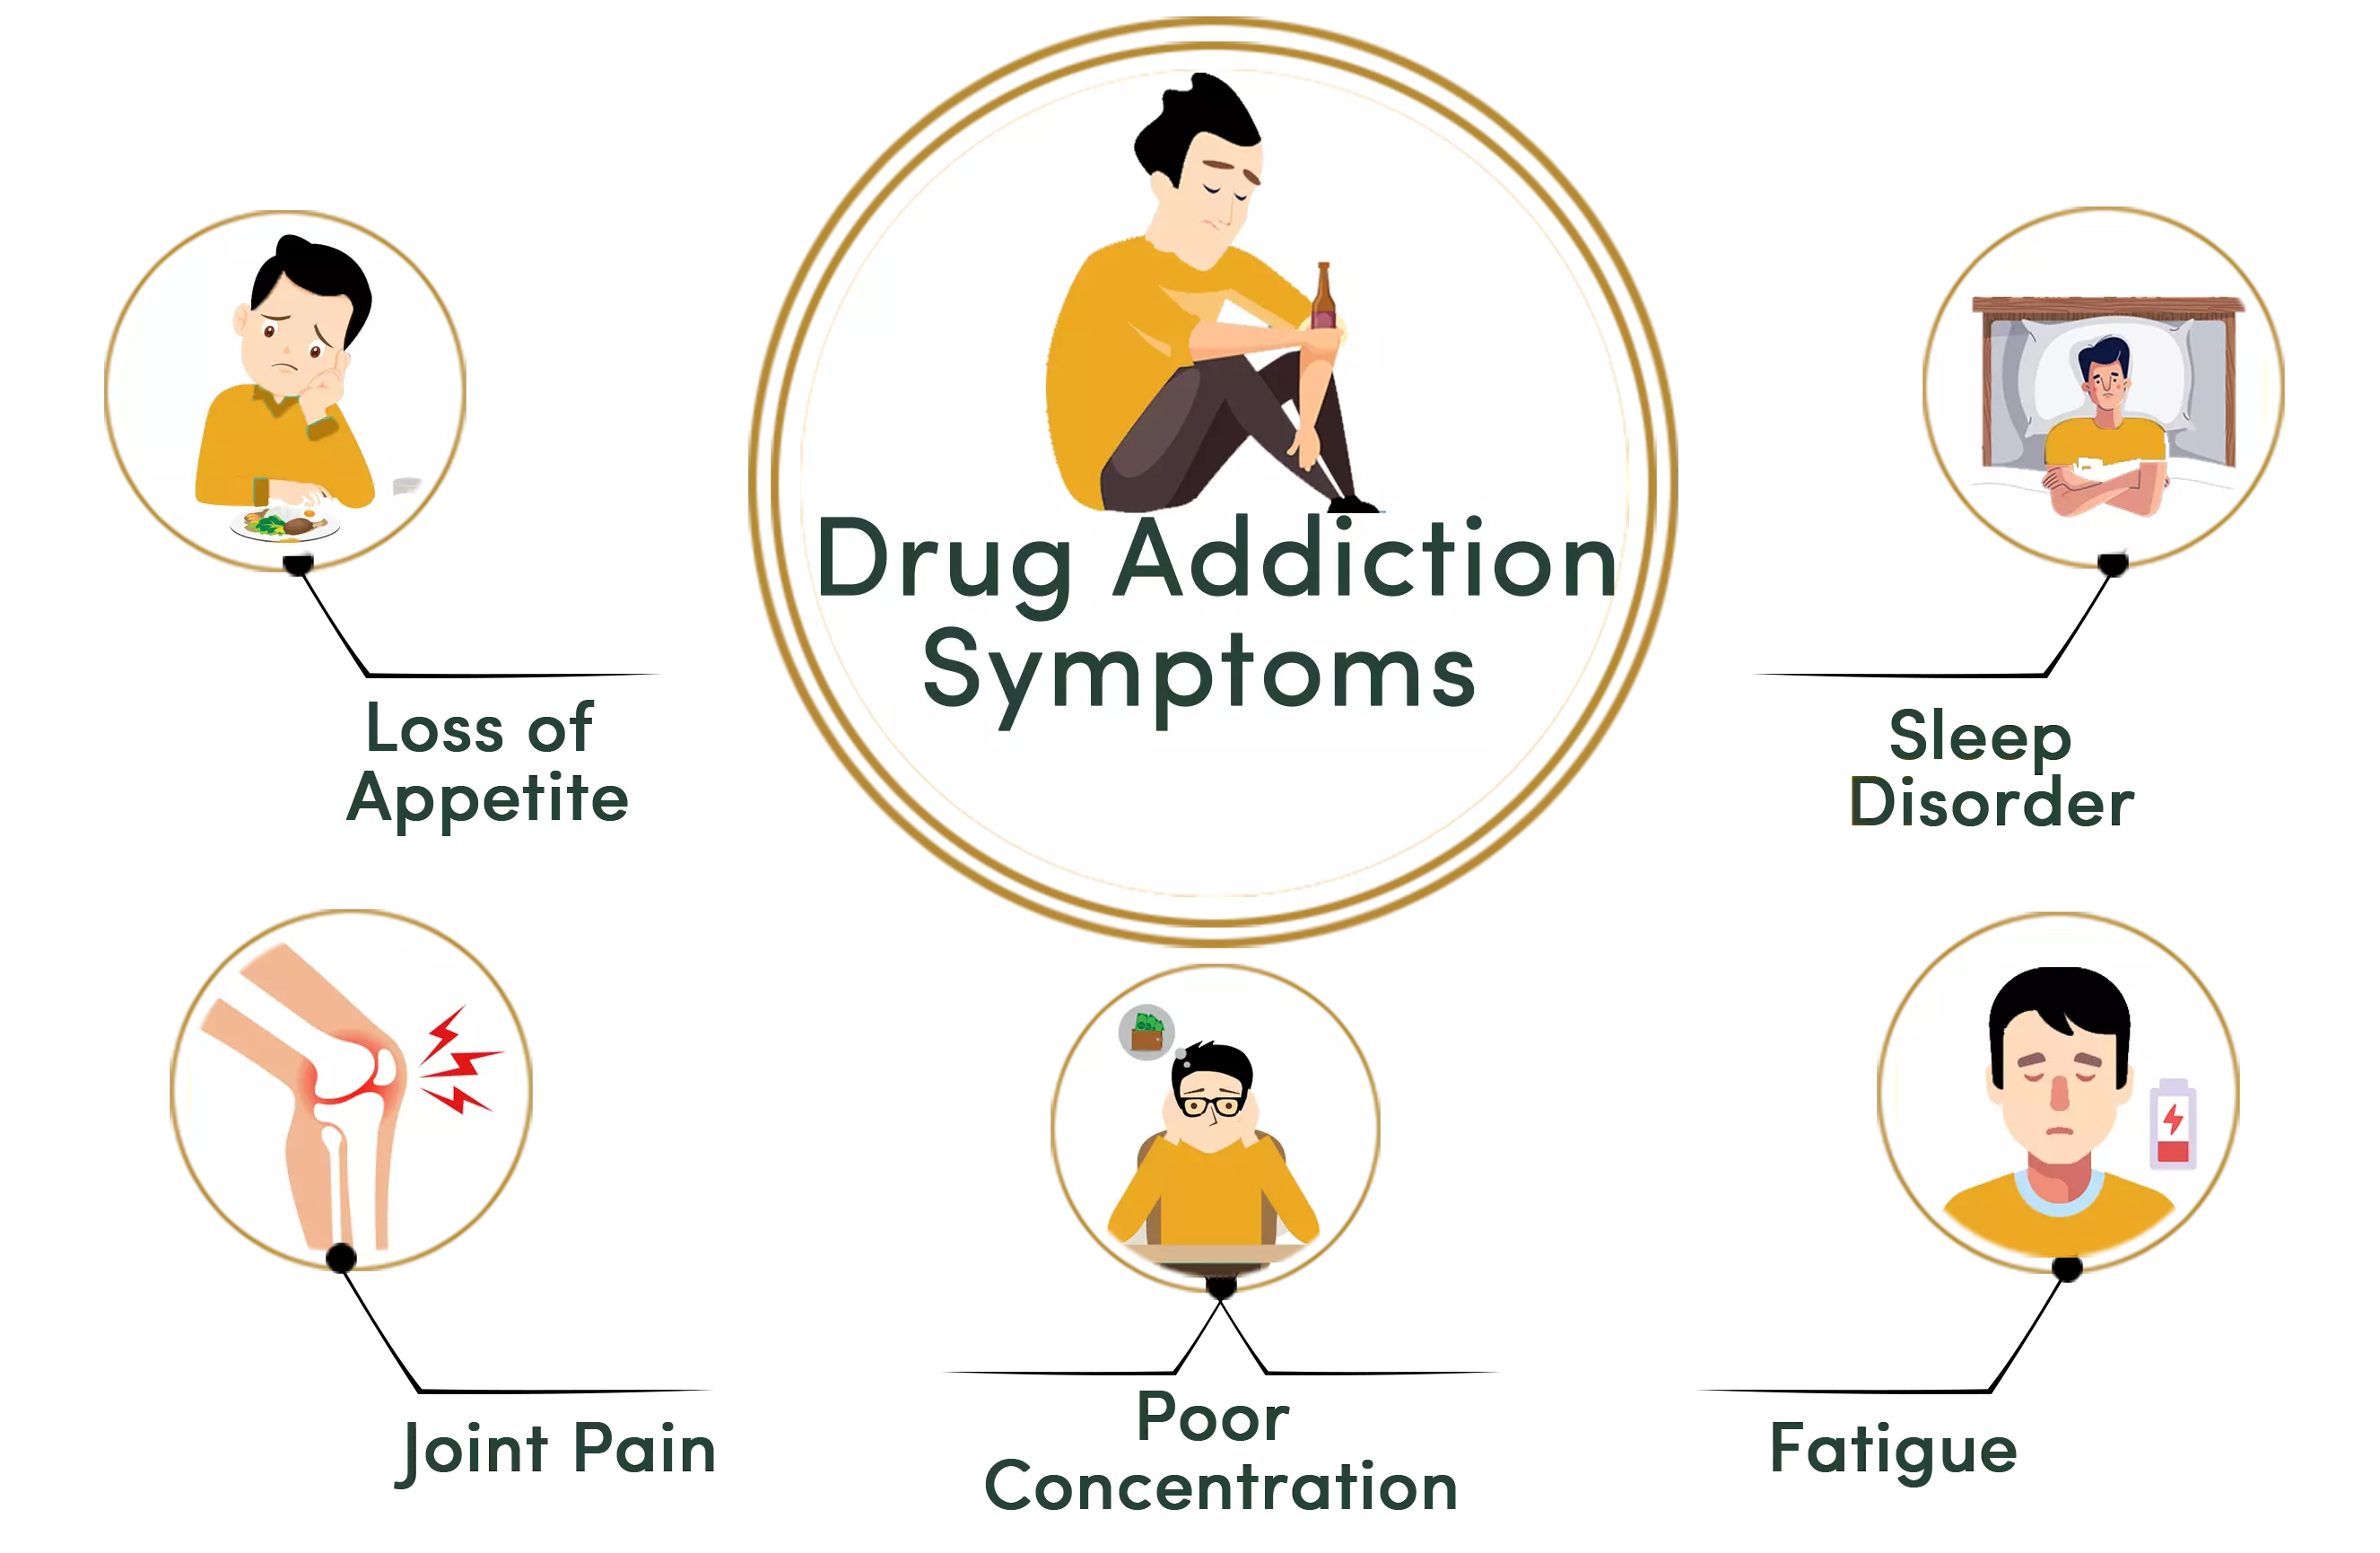 Drug addiction symptoms